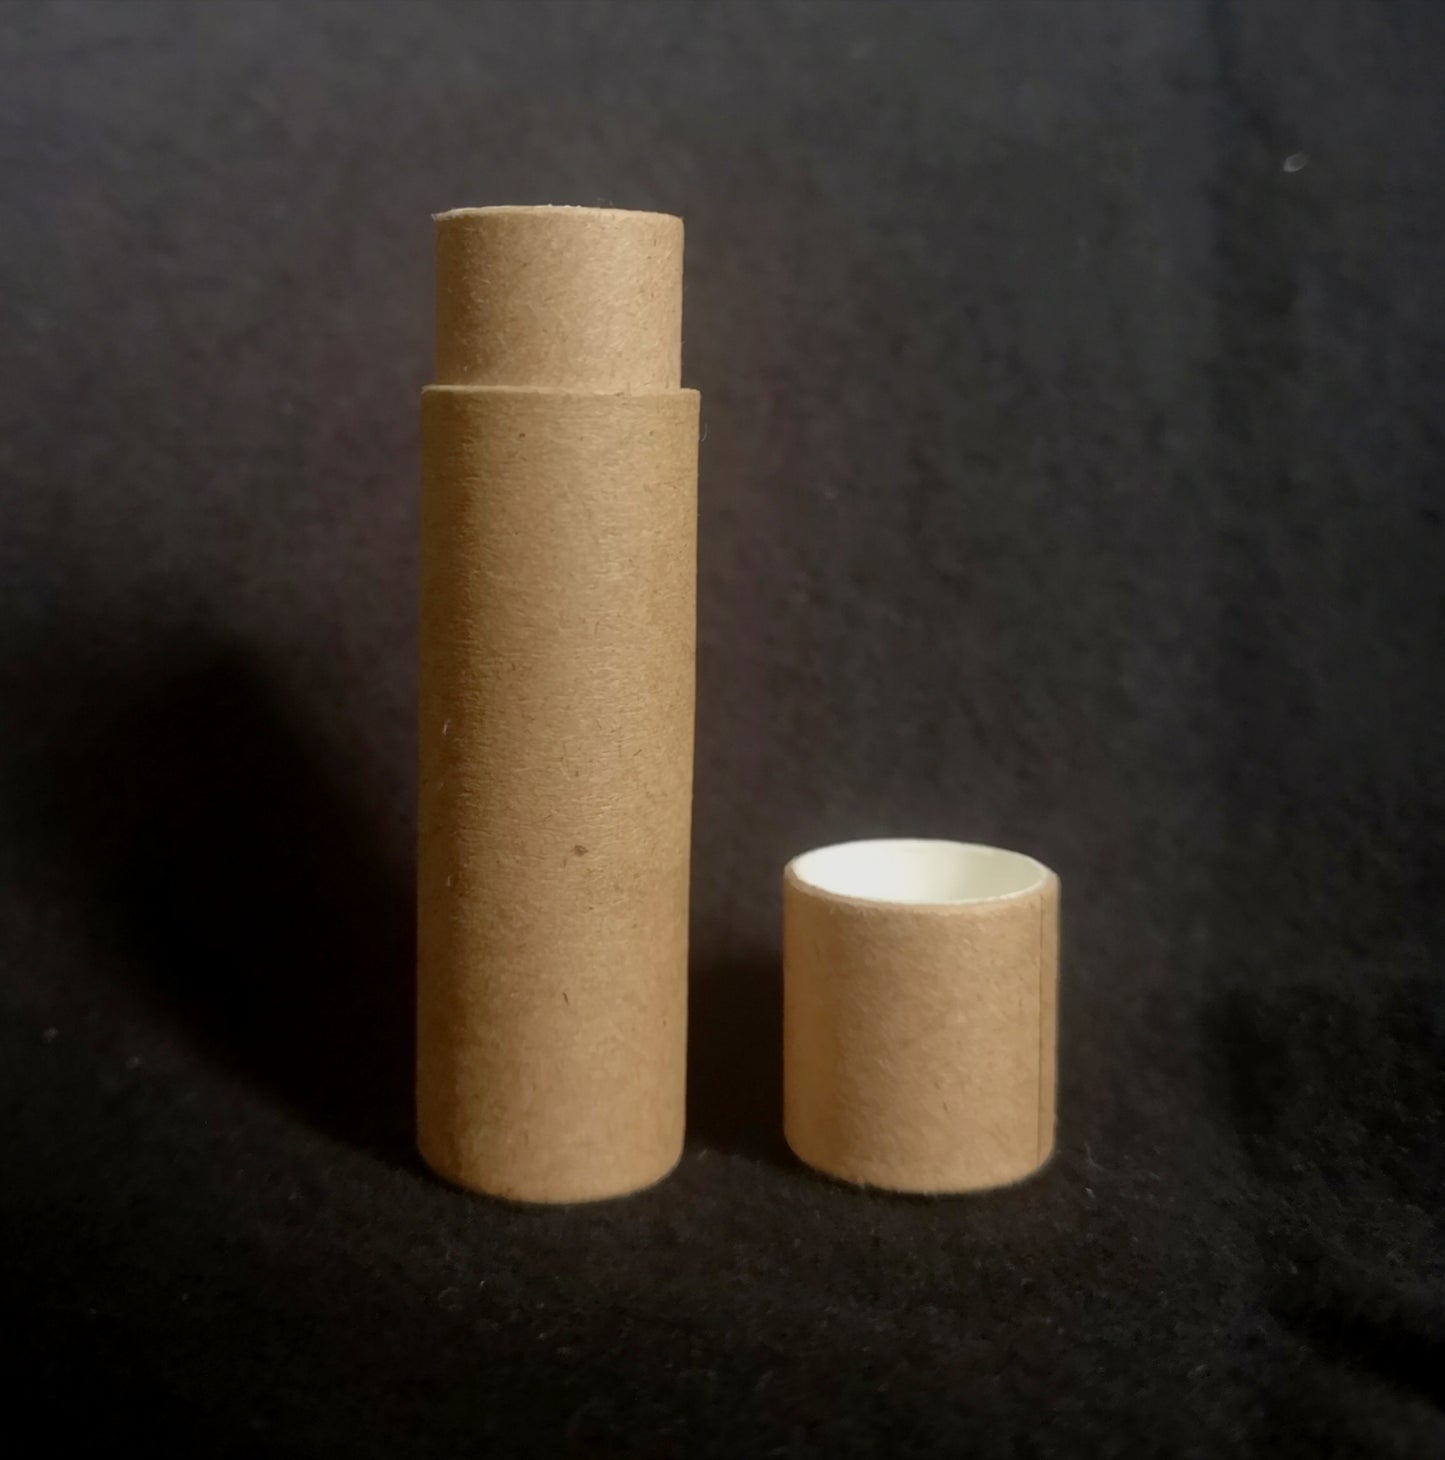 Lippenbalsamhülsen 17,8 ml - leer für DIY-Projekte